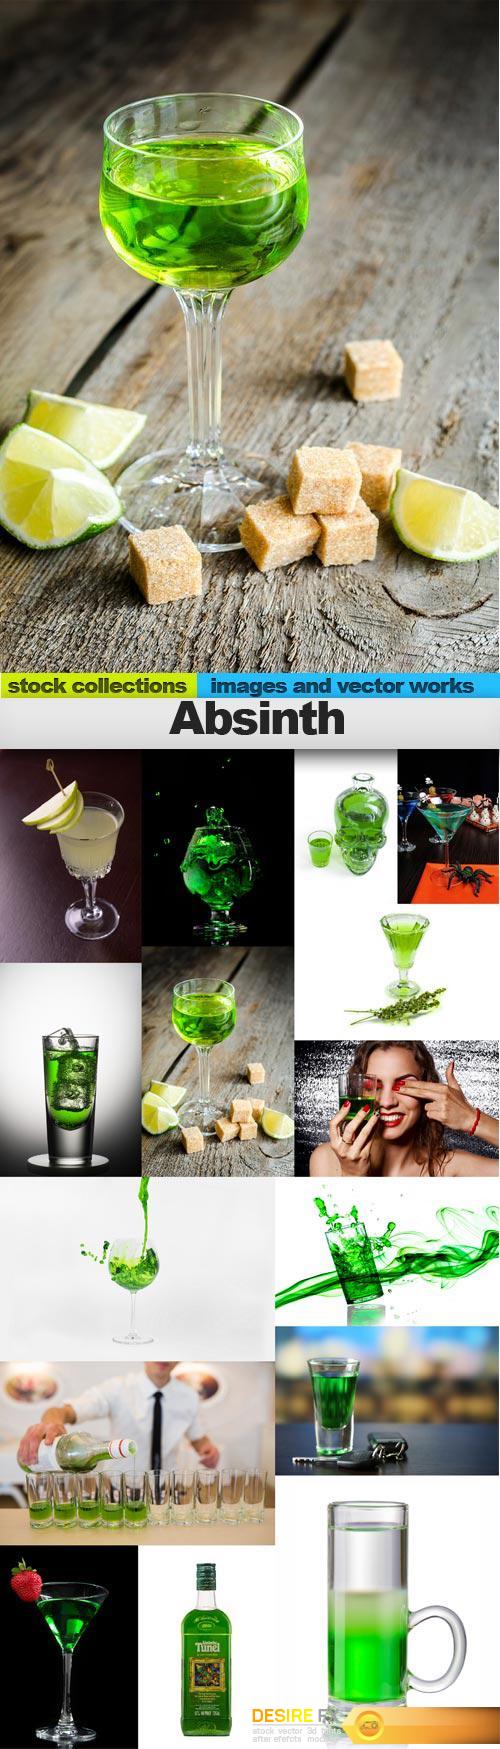 Absinth,15 x UHQ JPEG